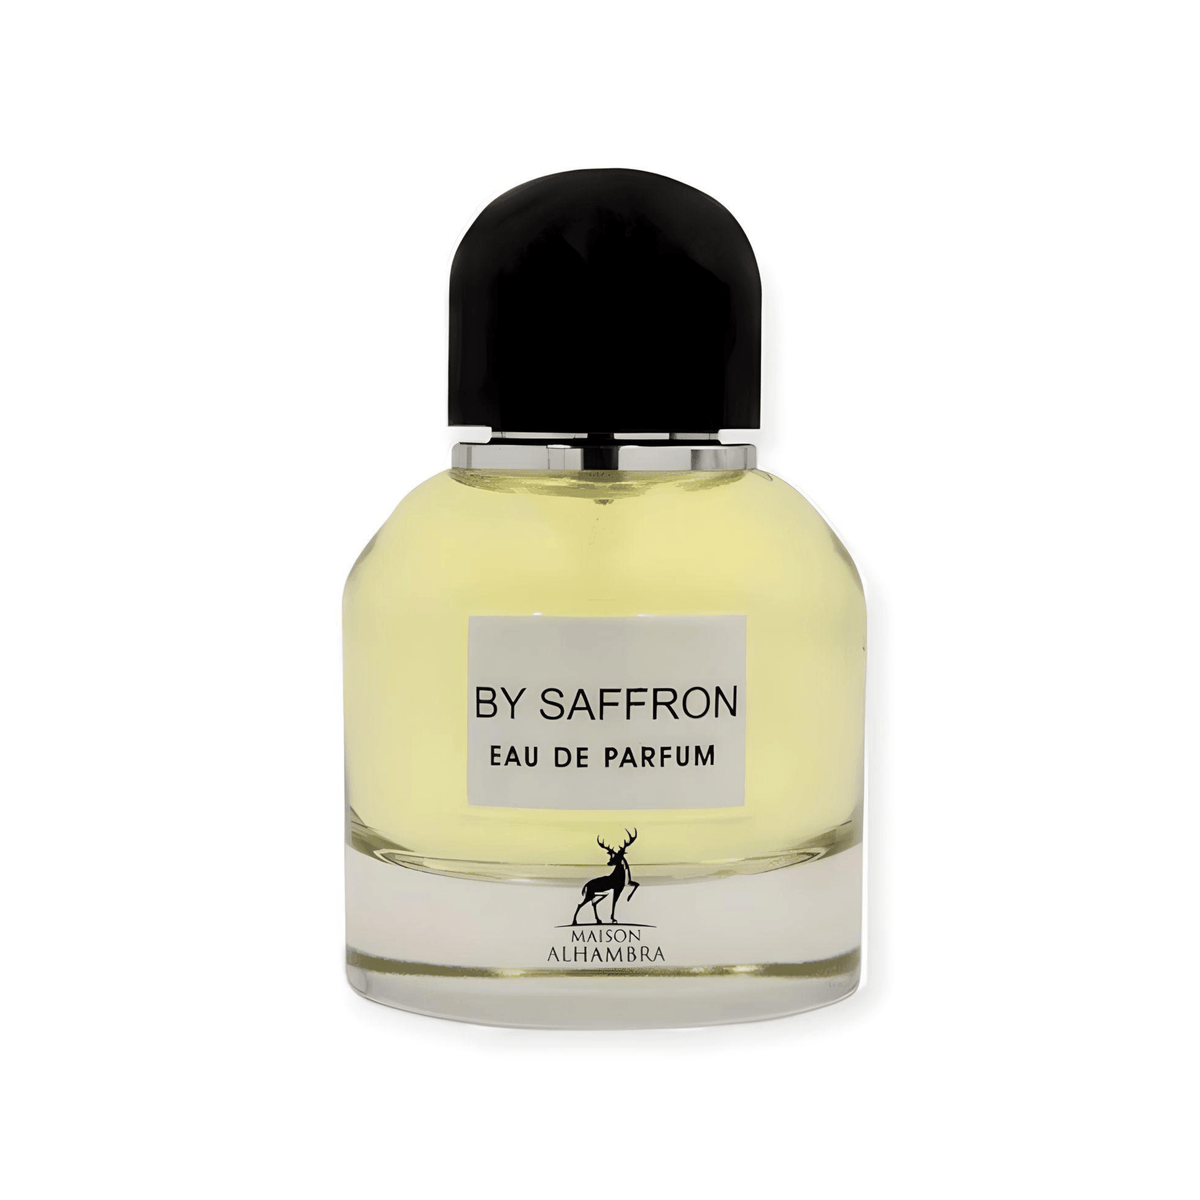 Al Hambra Parfum by Saffron